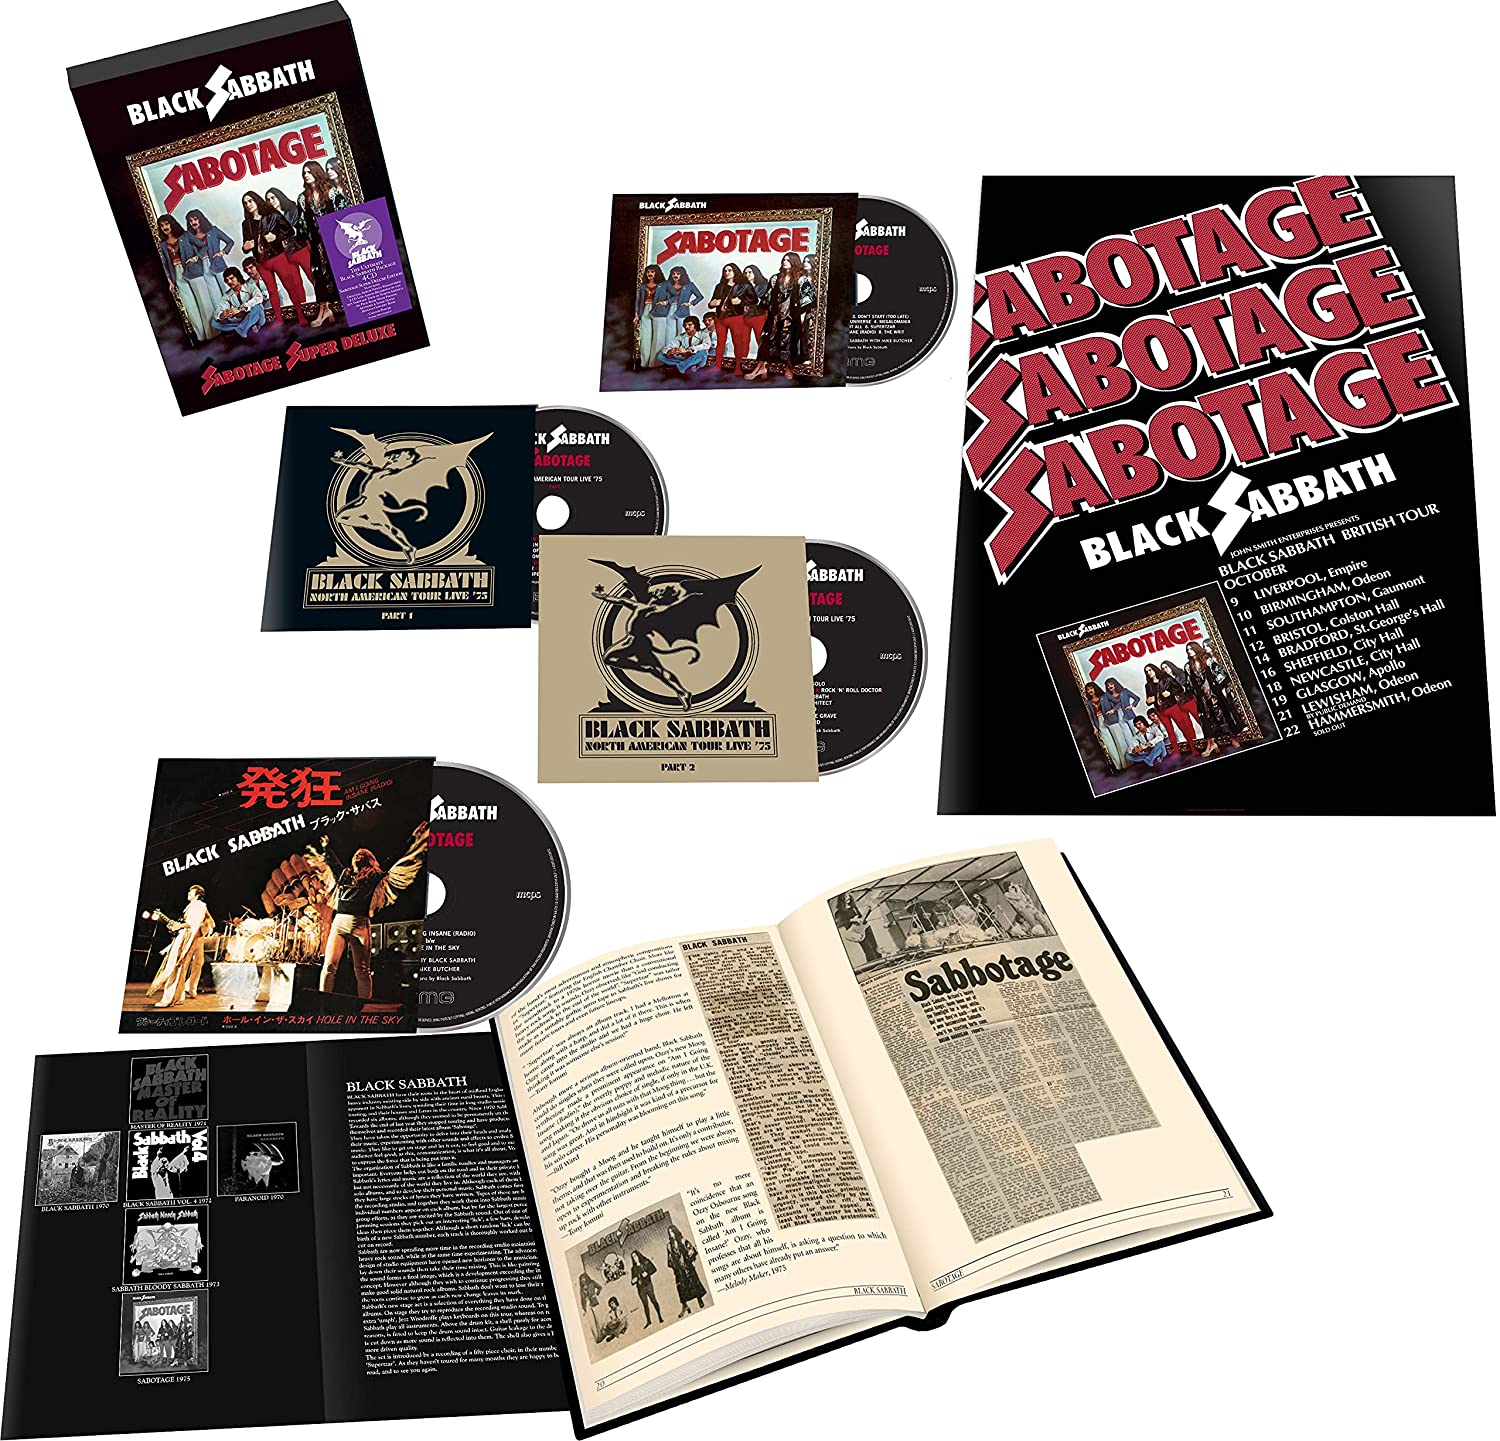 Black Sabbath "Sabotage" Super Deluxe 4 CD Box Set